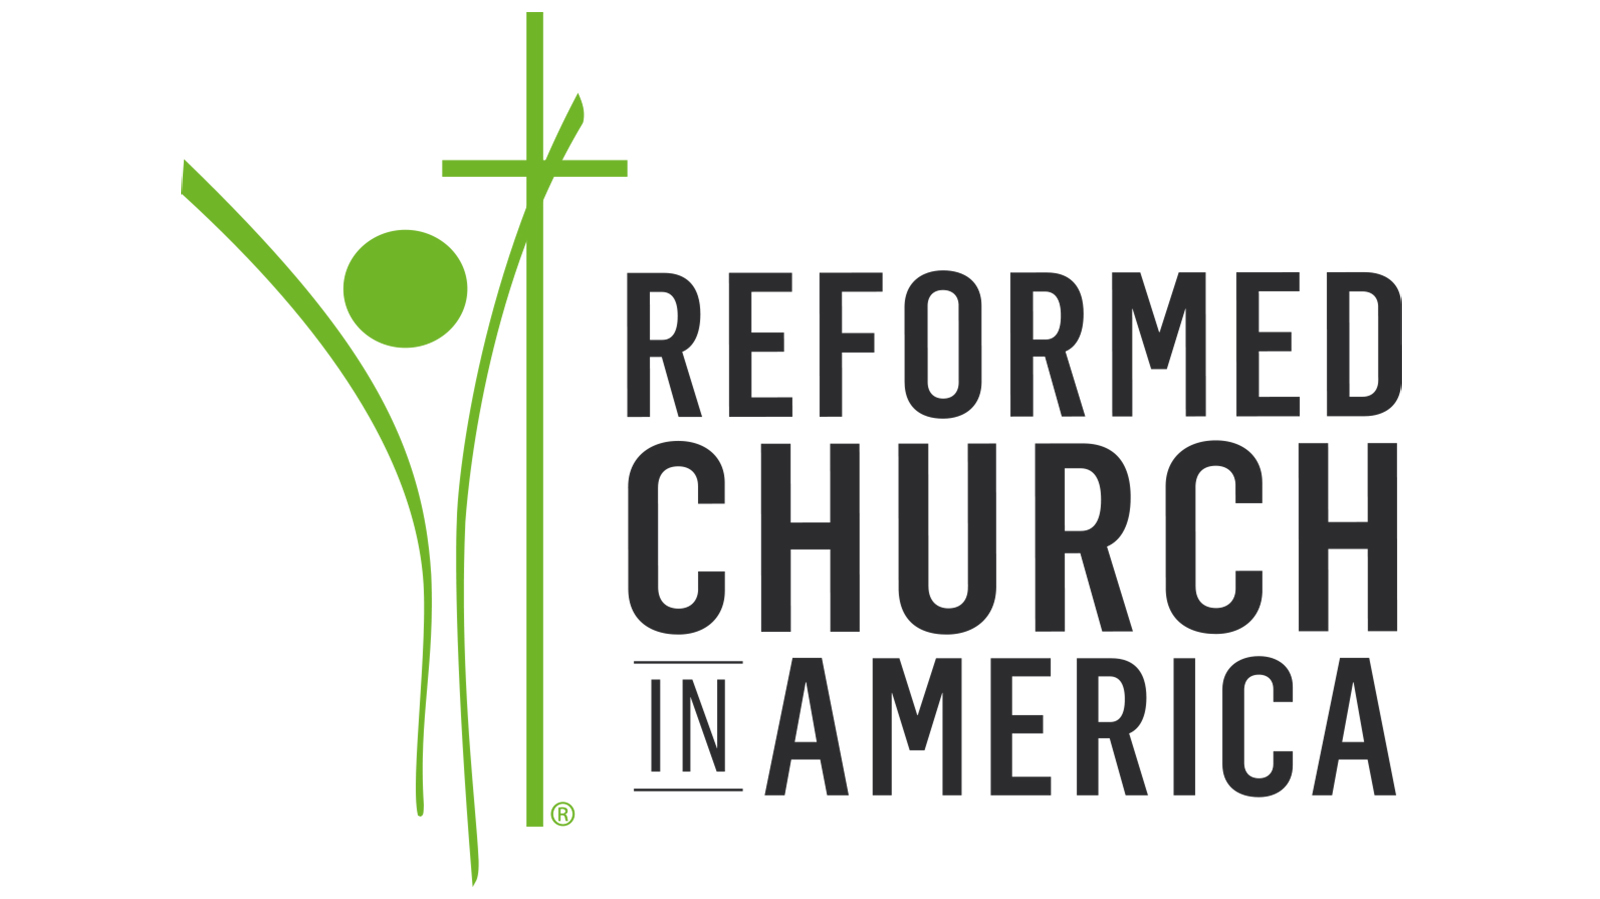 The Reformed Church in America logo. Courtesy image